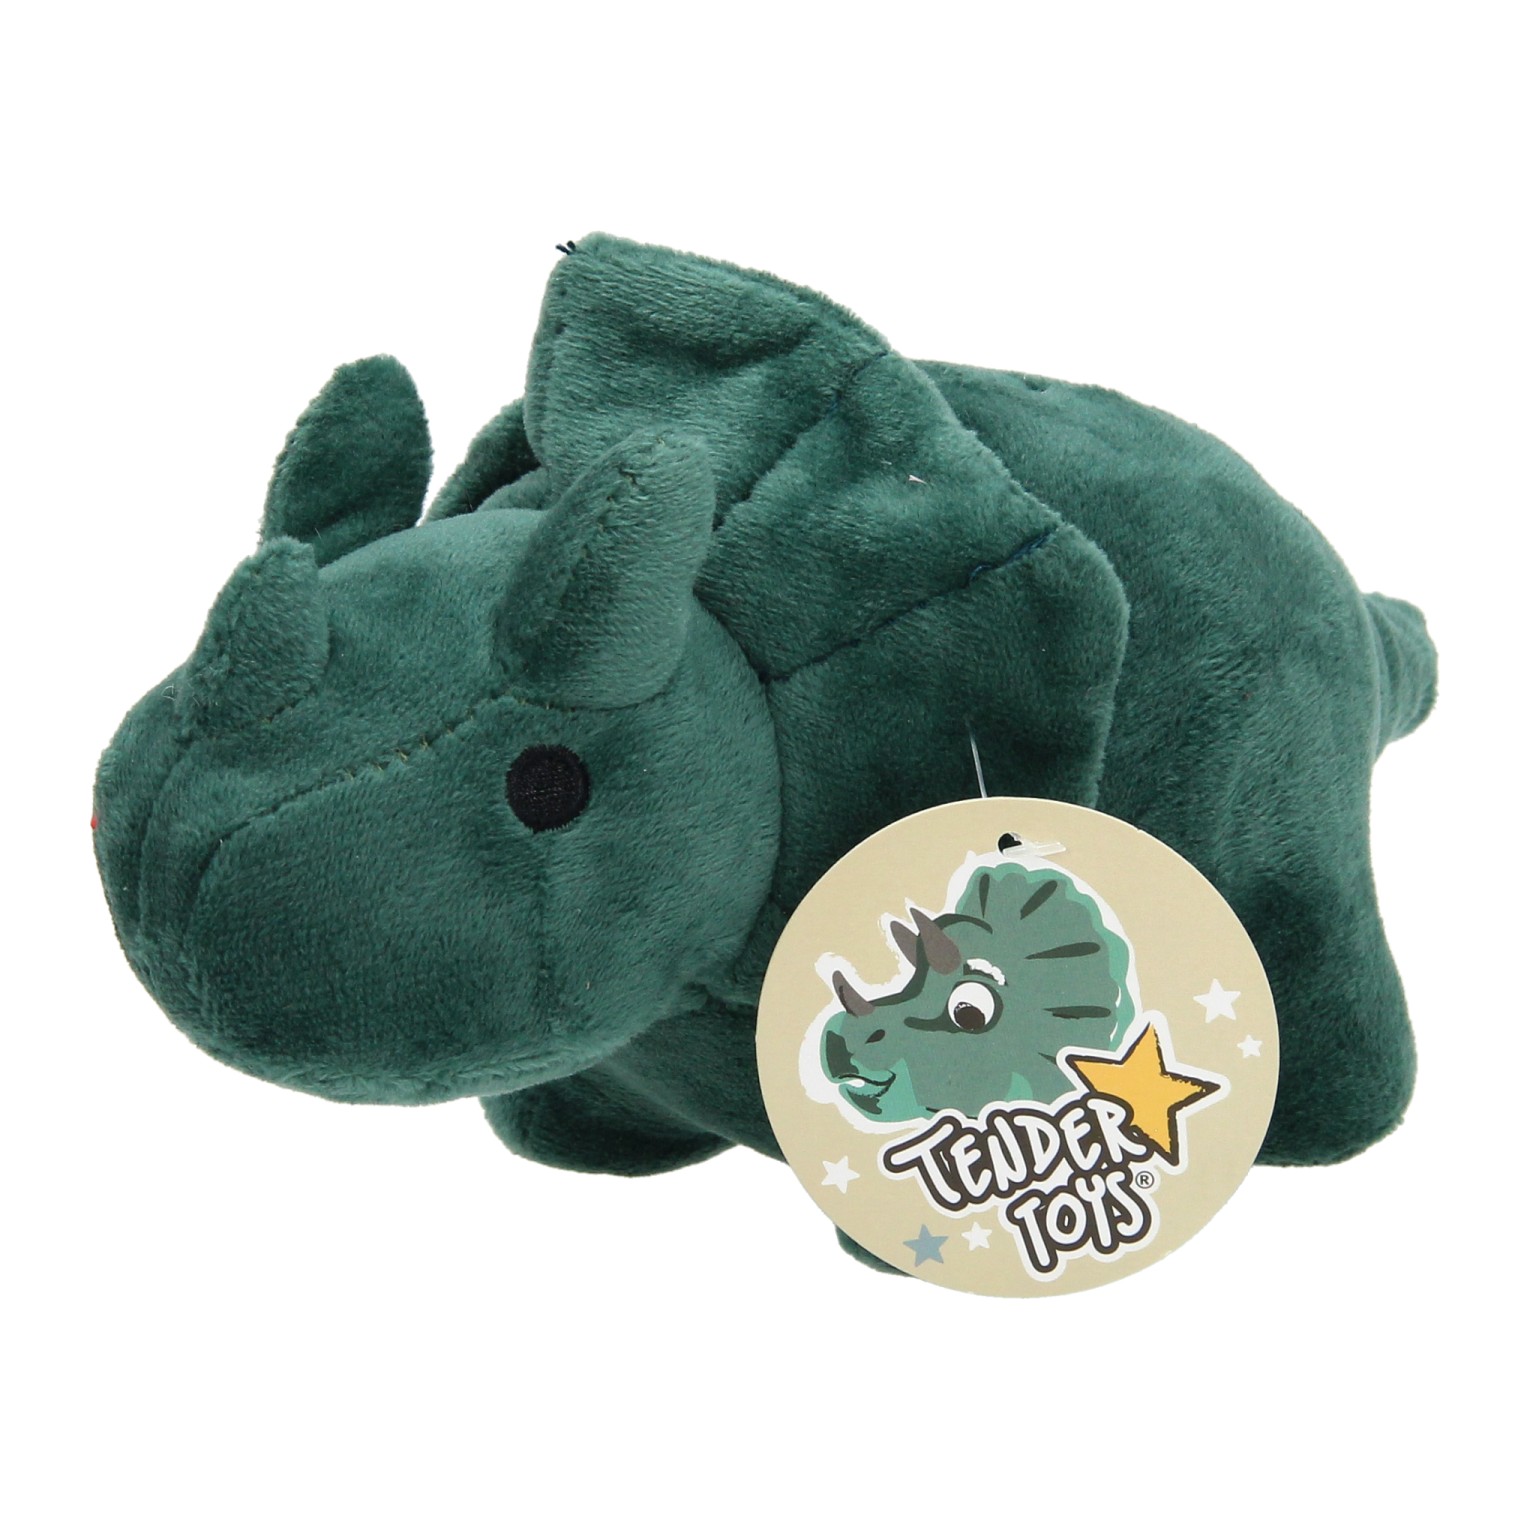 Plush Toy Triceratops Thimble Toys